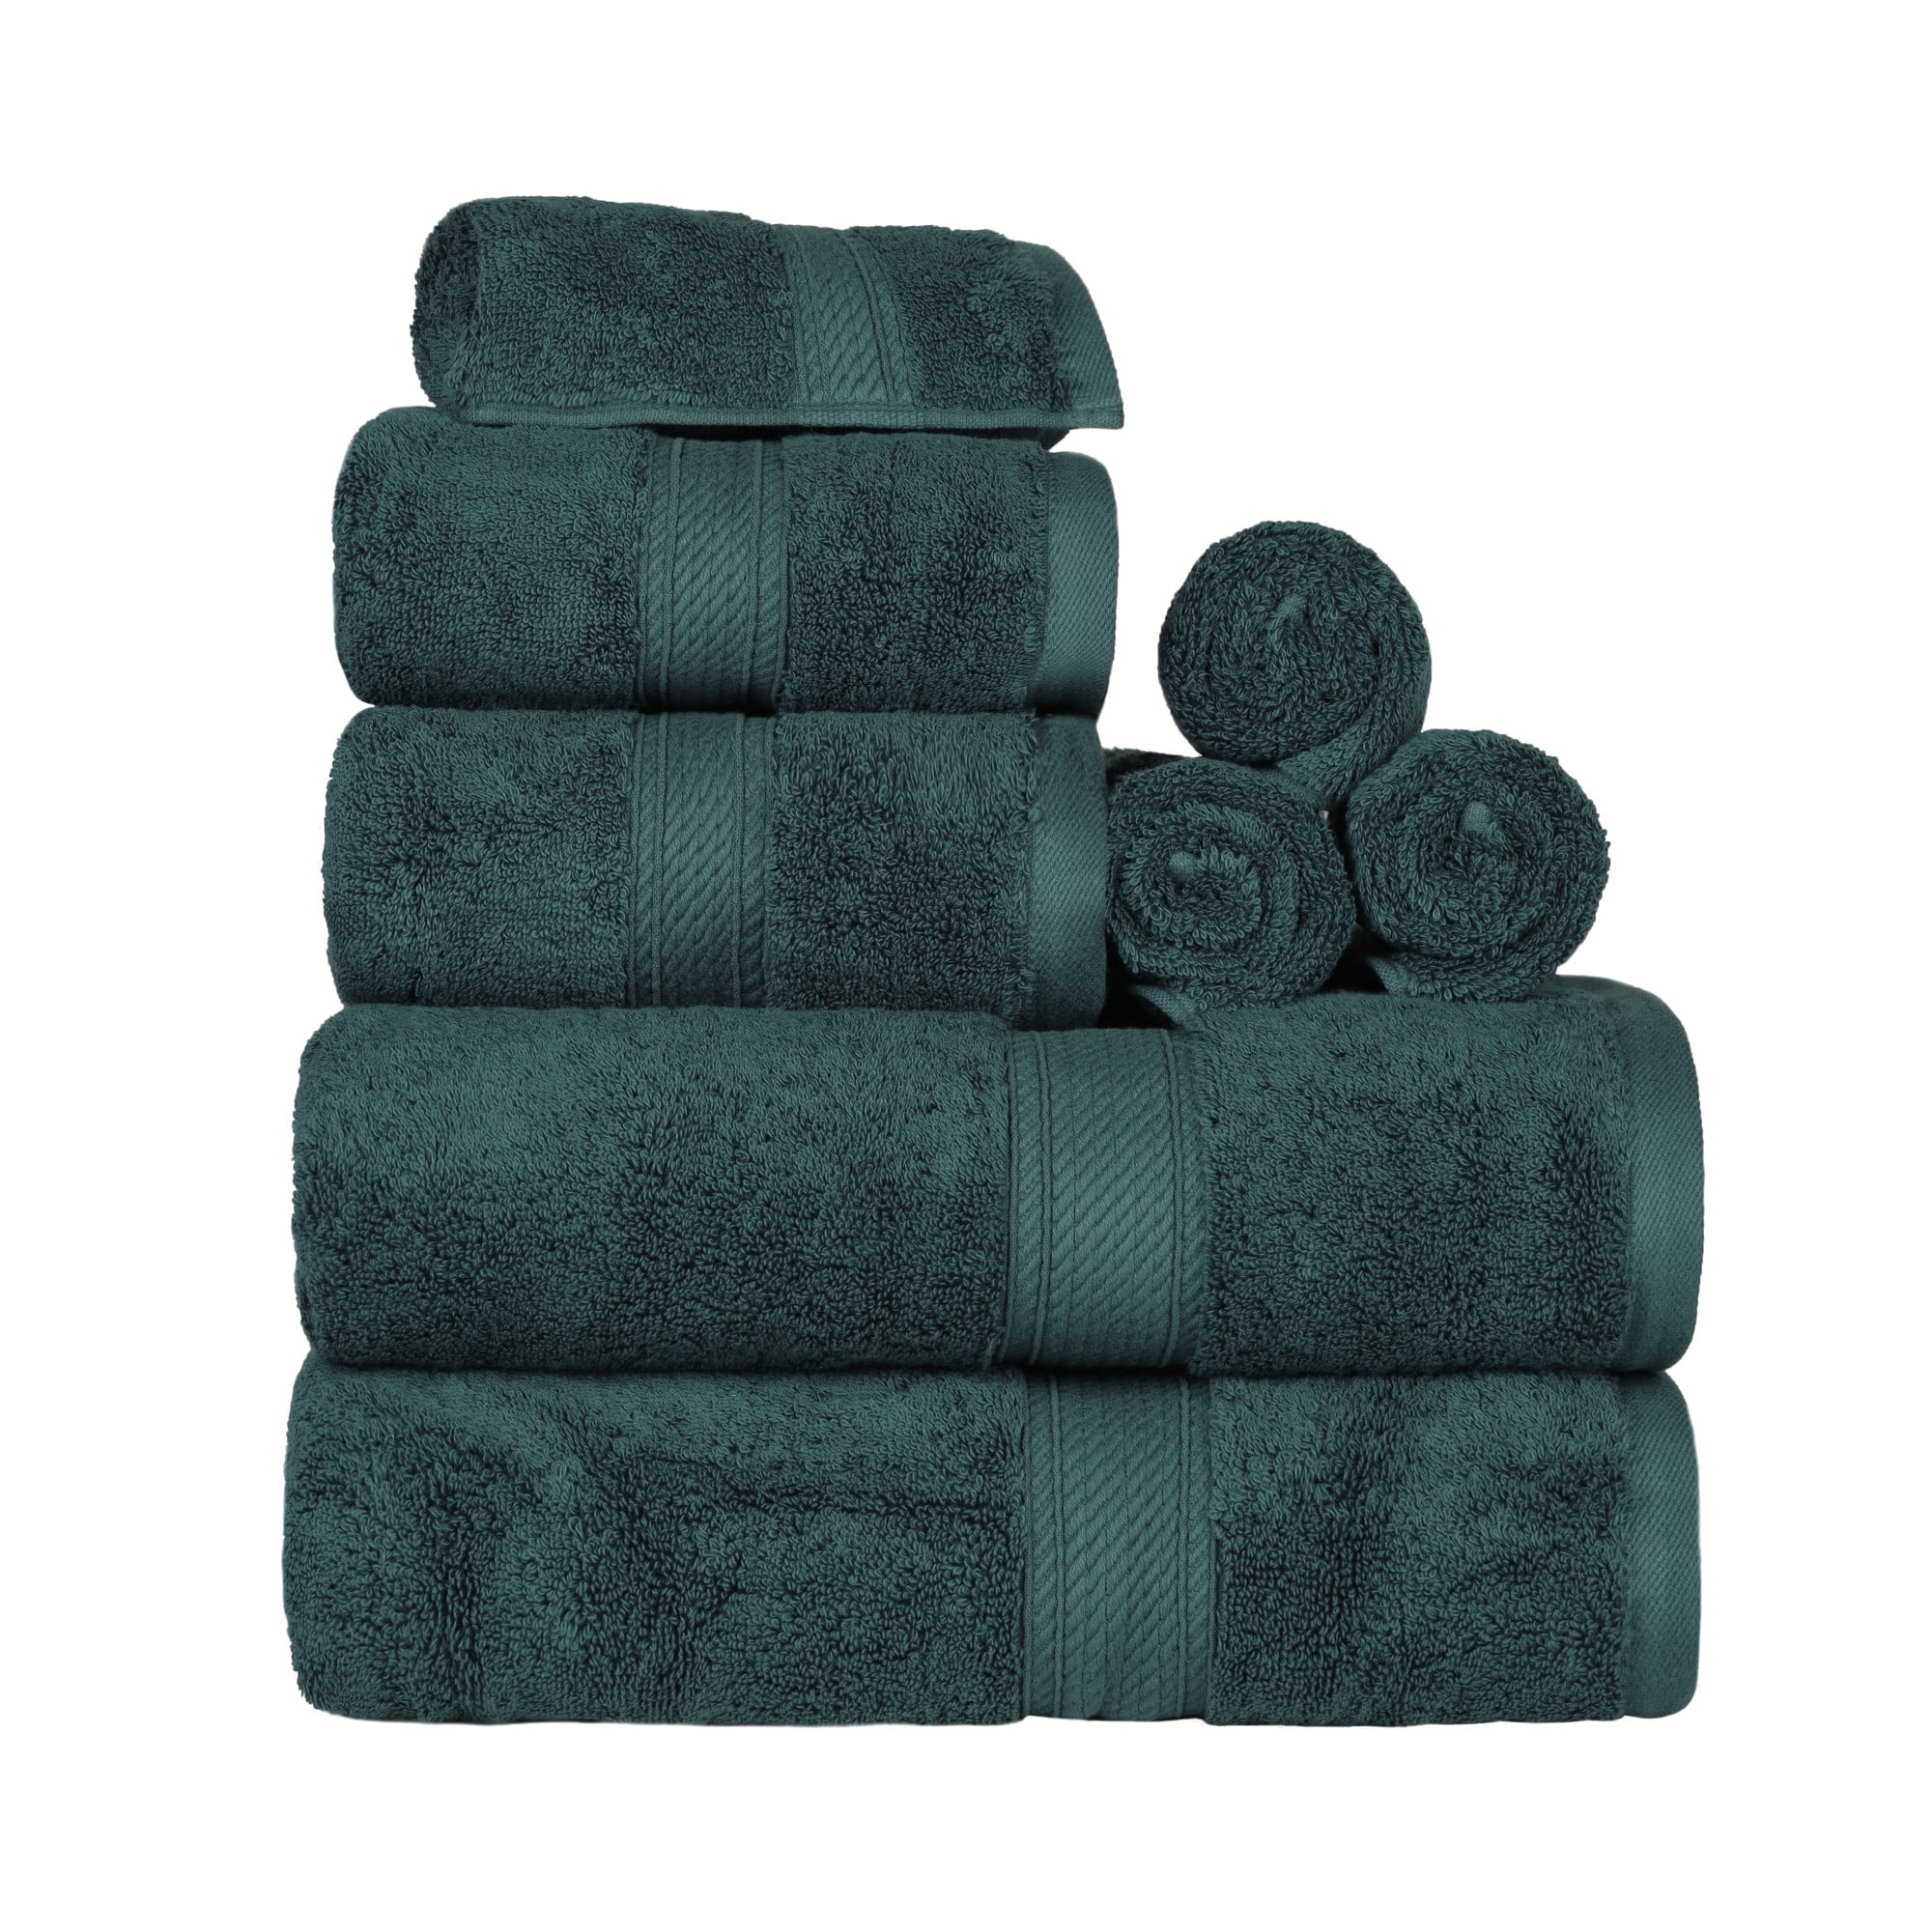 Soft Textured 8 Piece Towel Set, Teal Rain towels towels bathroom Home  Textile - AliExpress